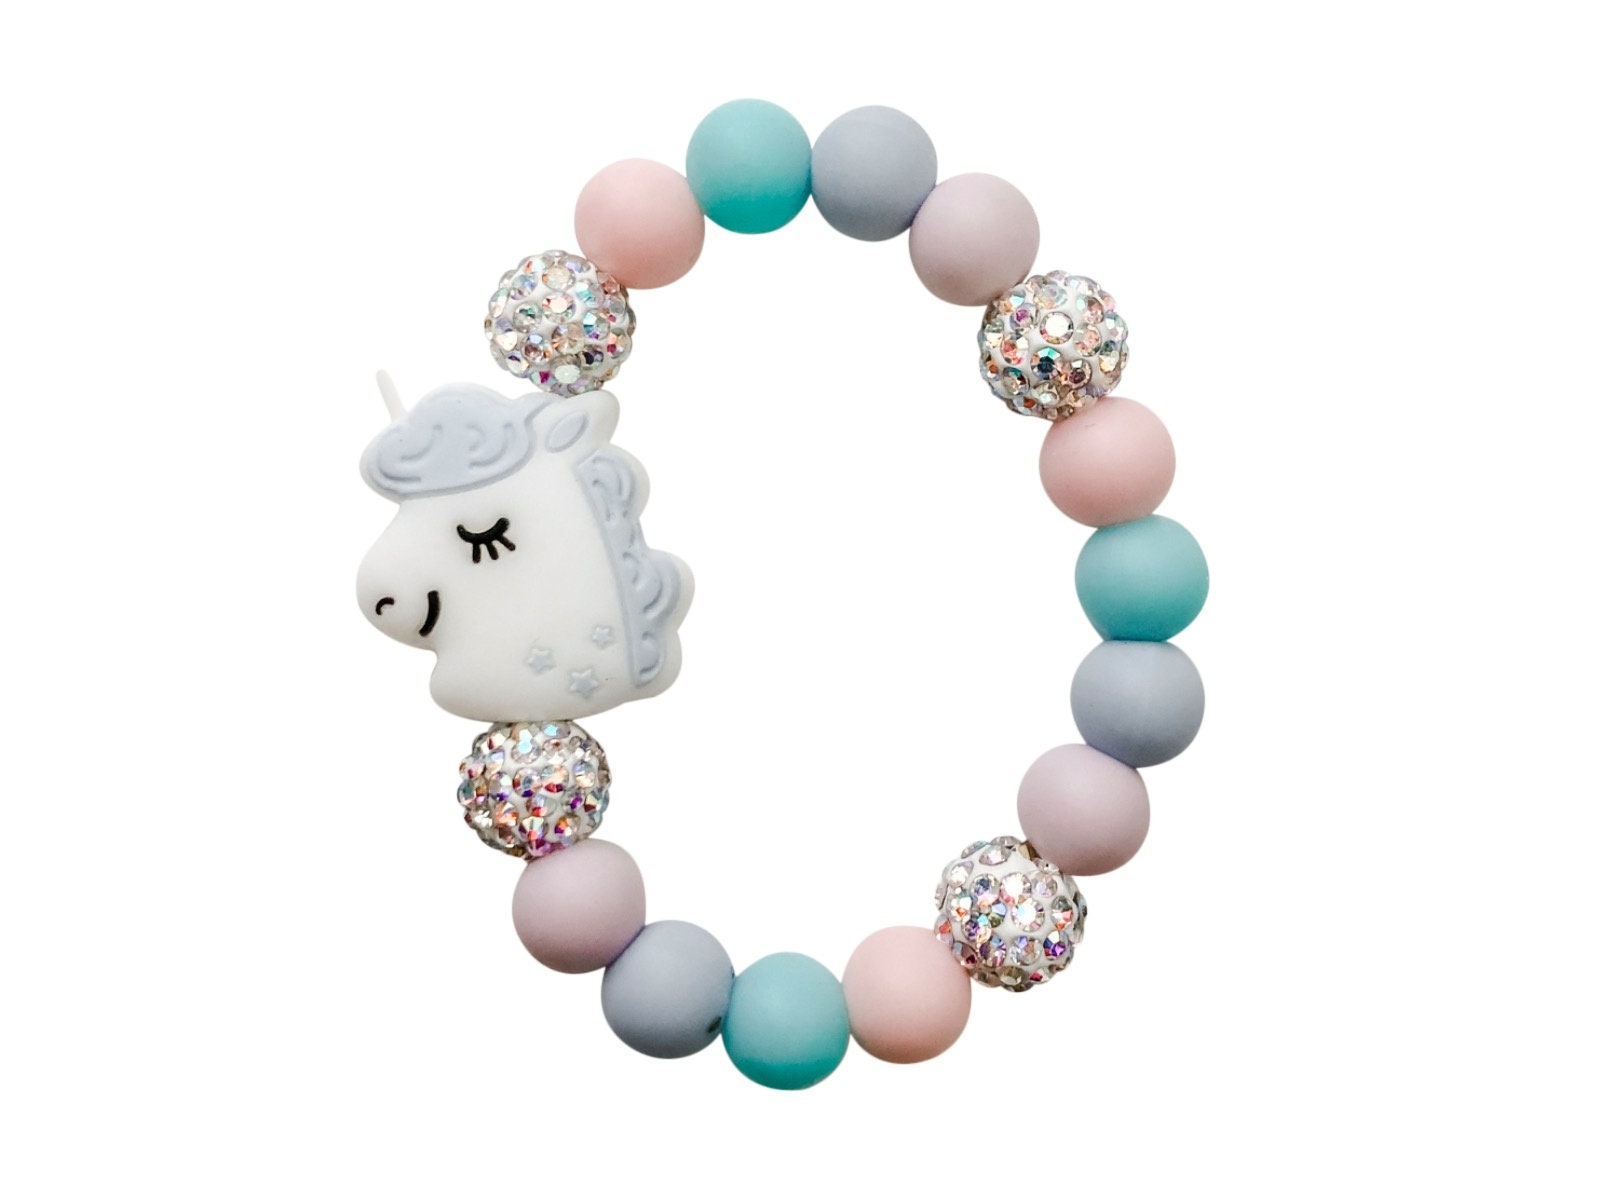 Girl's Unicorn Name Bracelet Pearl Jewelry Gift 